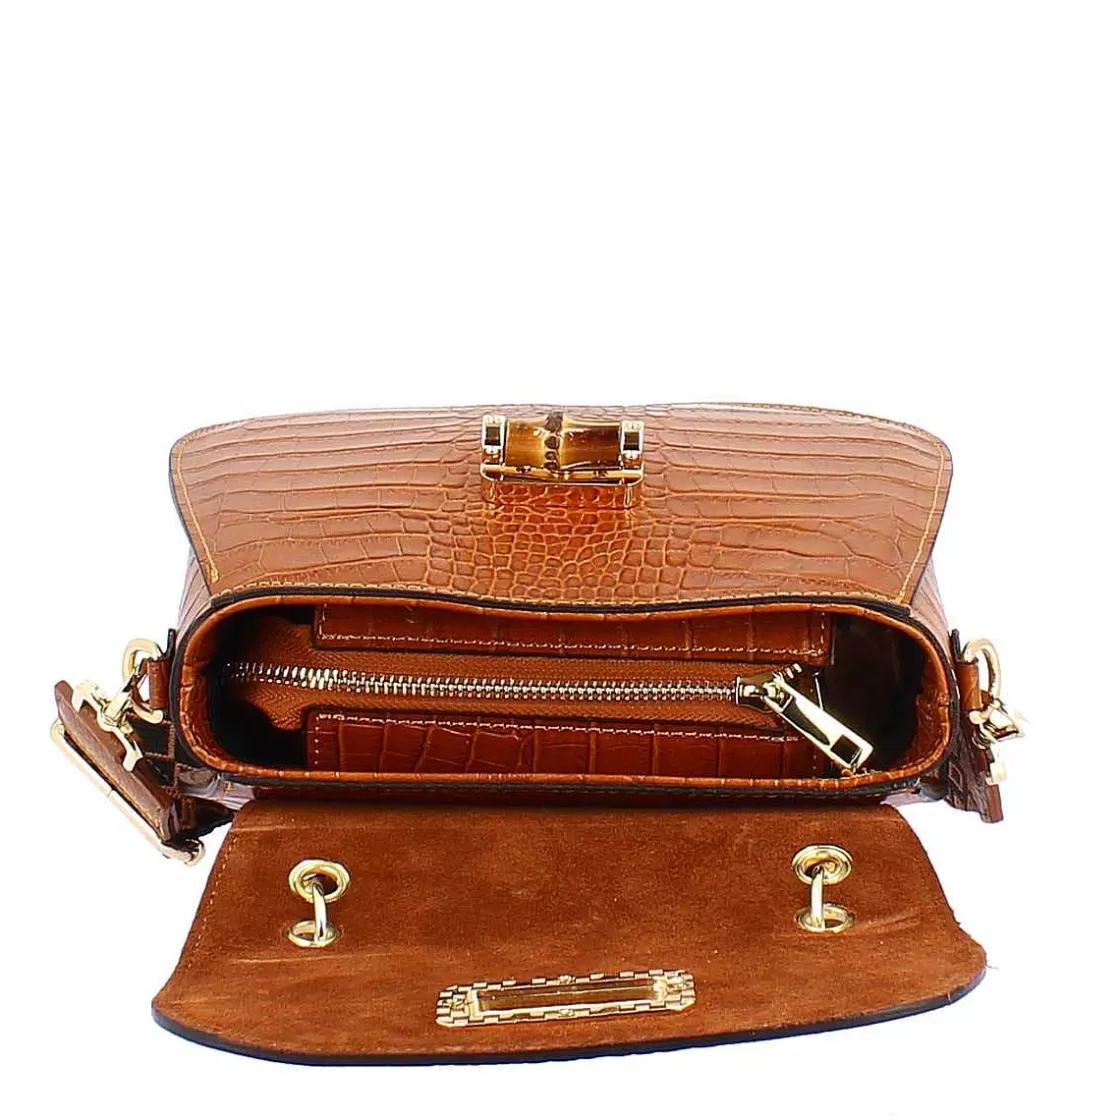 Leonardo Handmade Women'S Handbag In Brown Leather With Removable Shoulder Strap Flash Sale